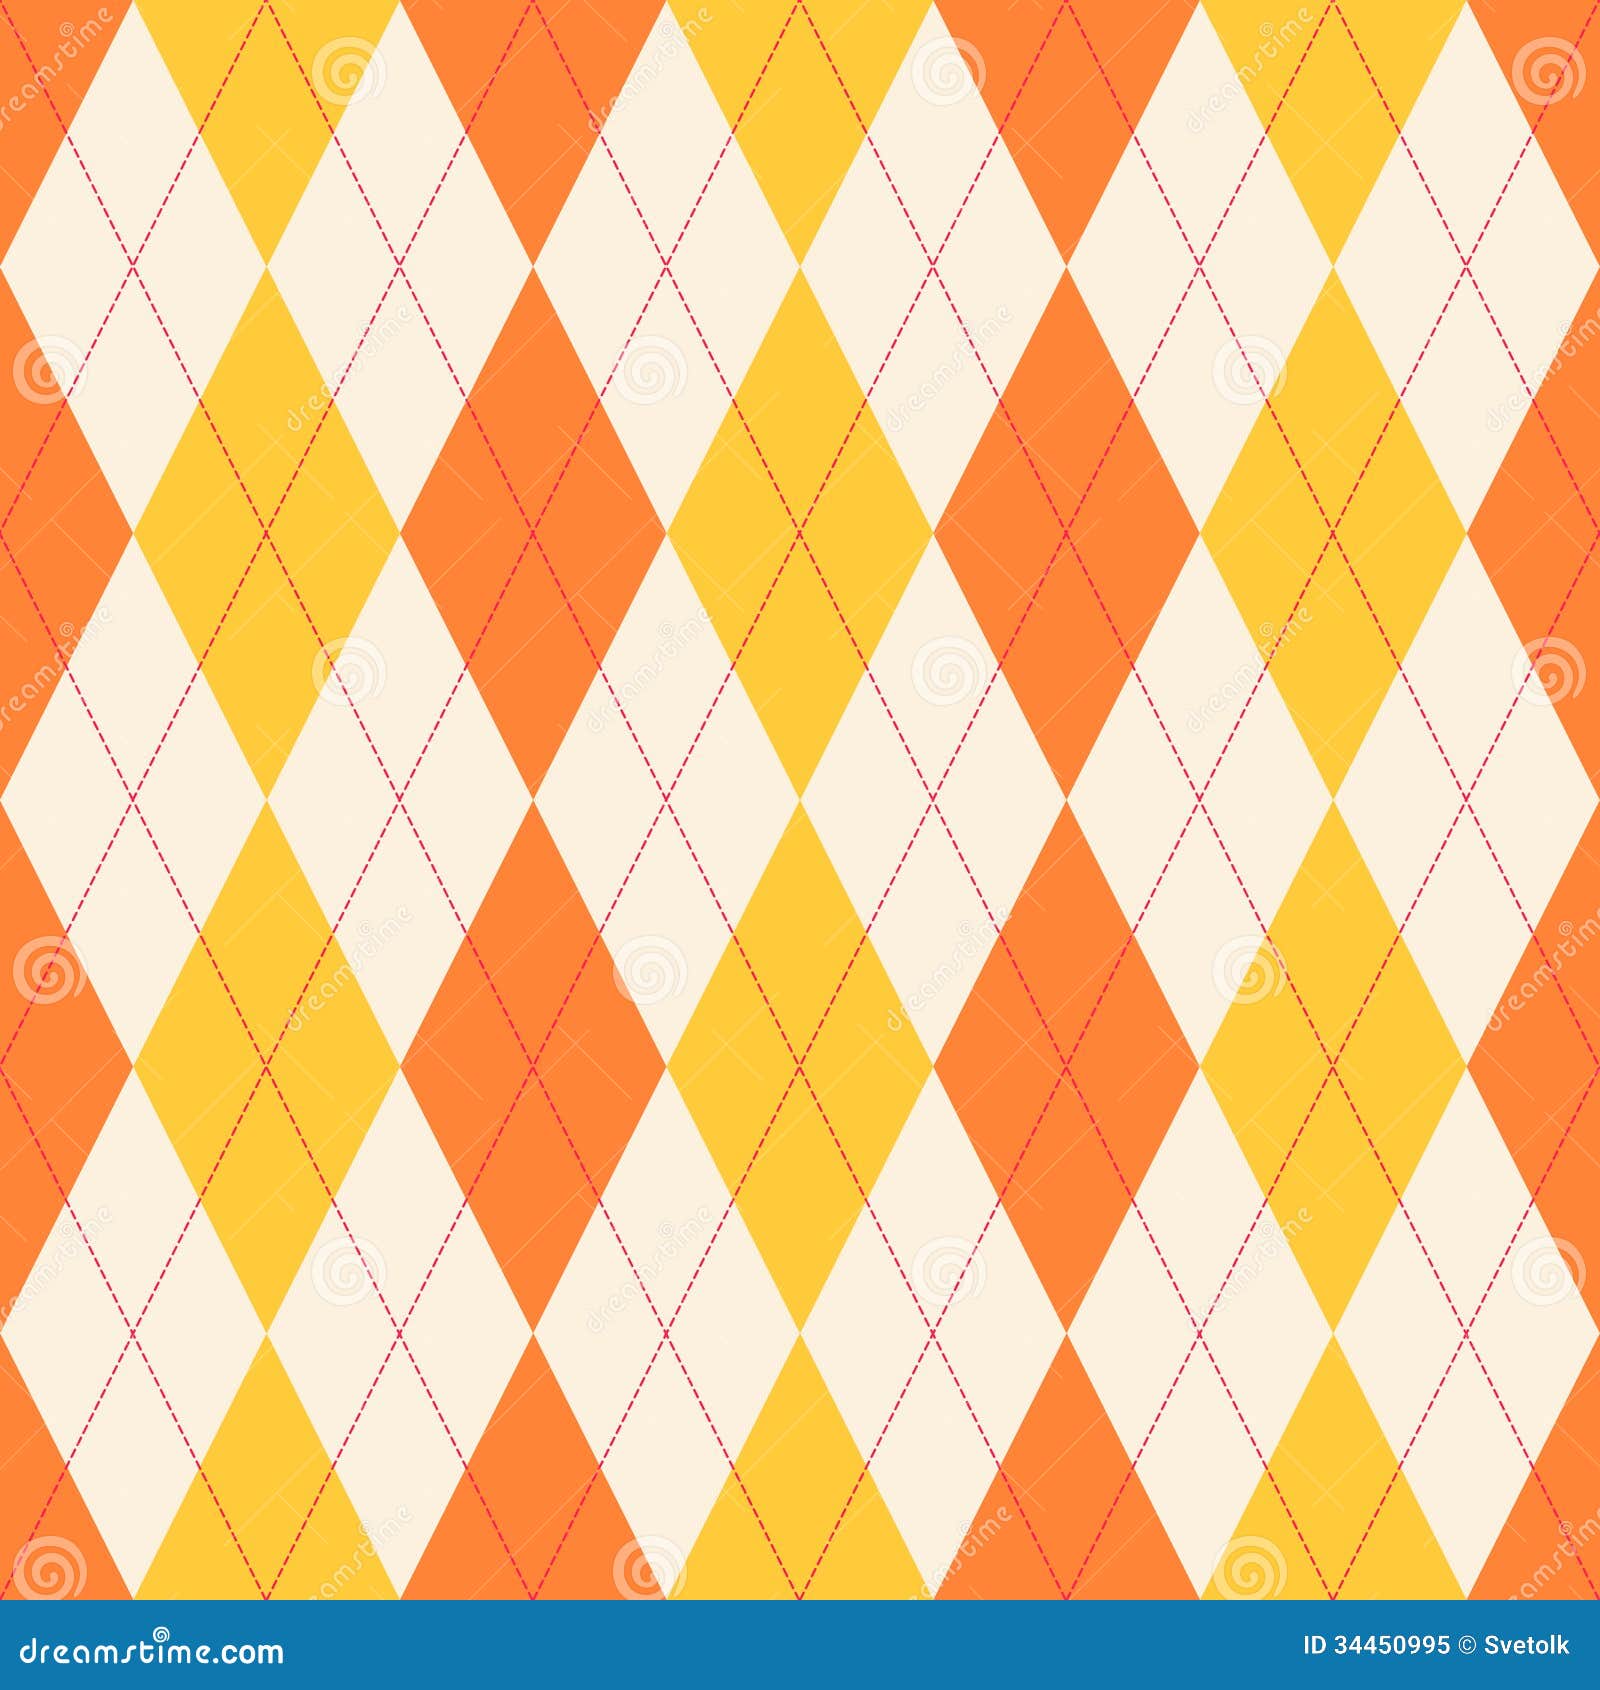 Seamless Classical Argyle Pattern. Royalty Free Stock Photo - Image